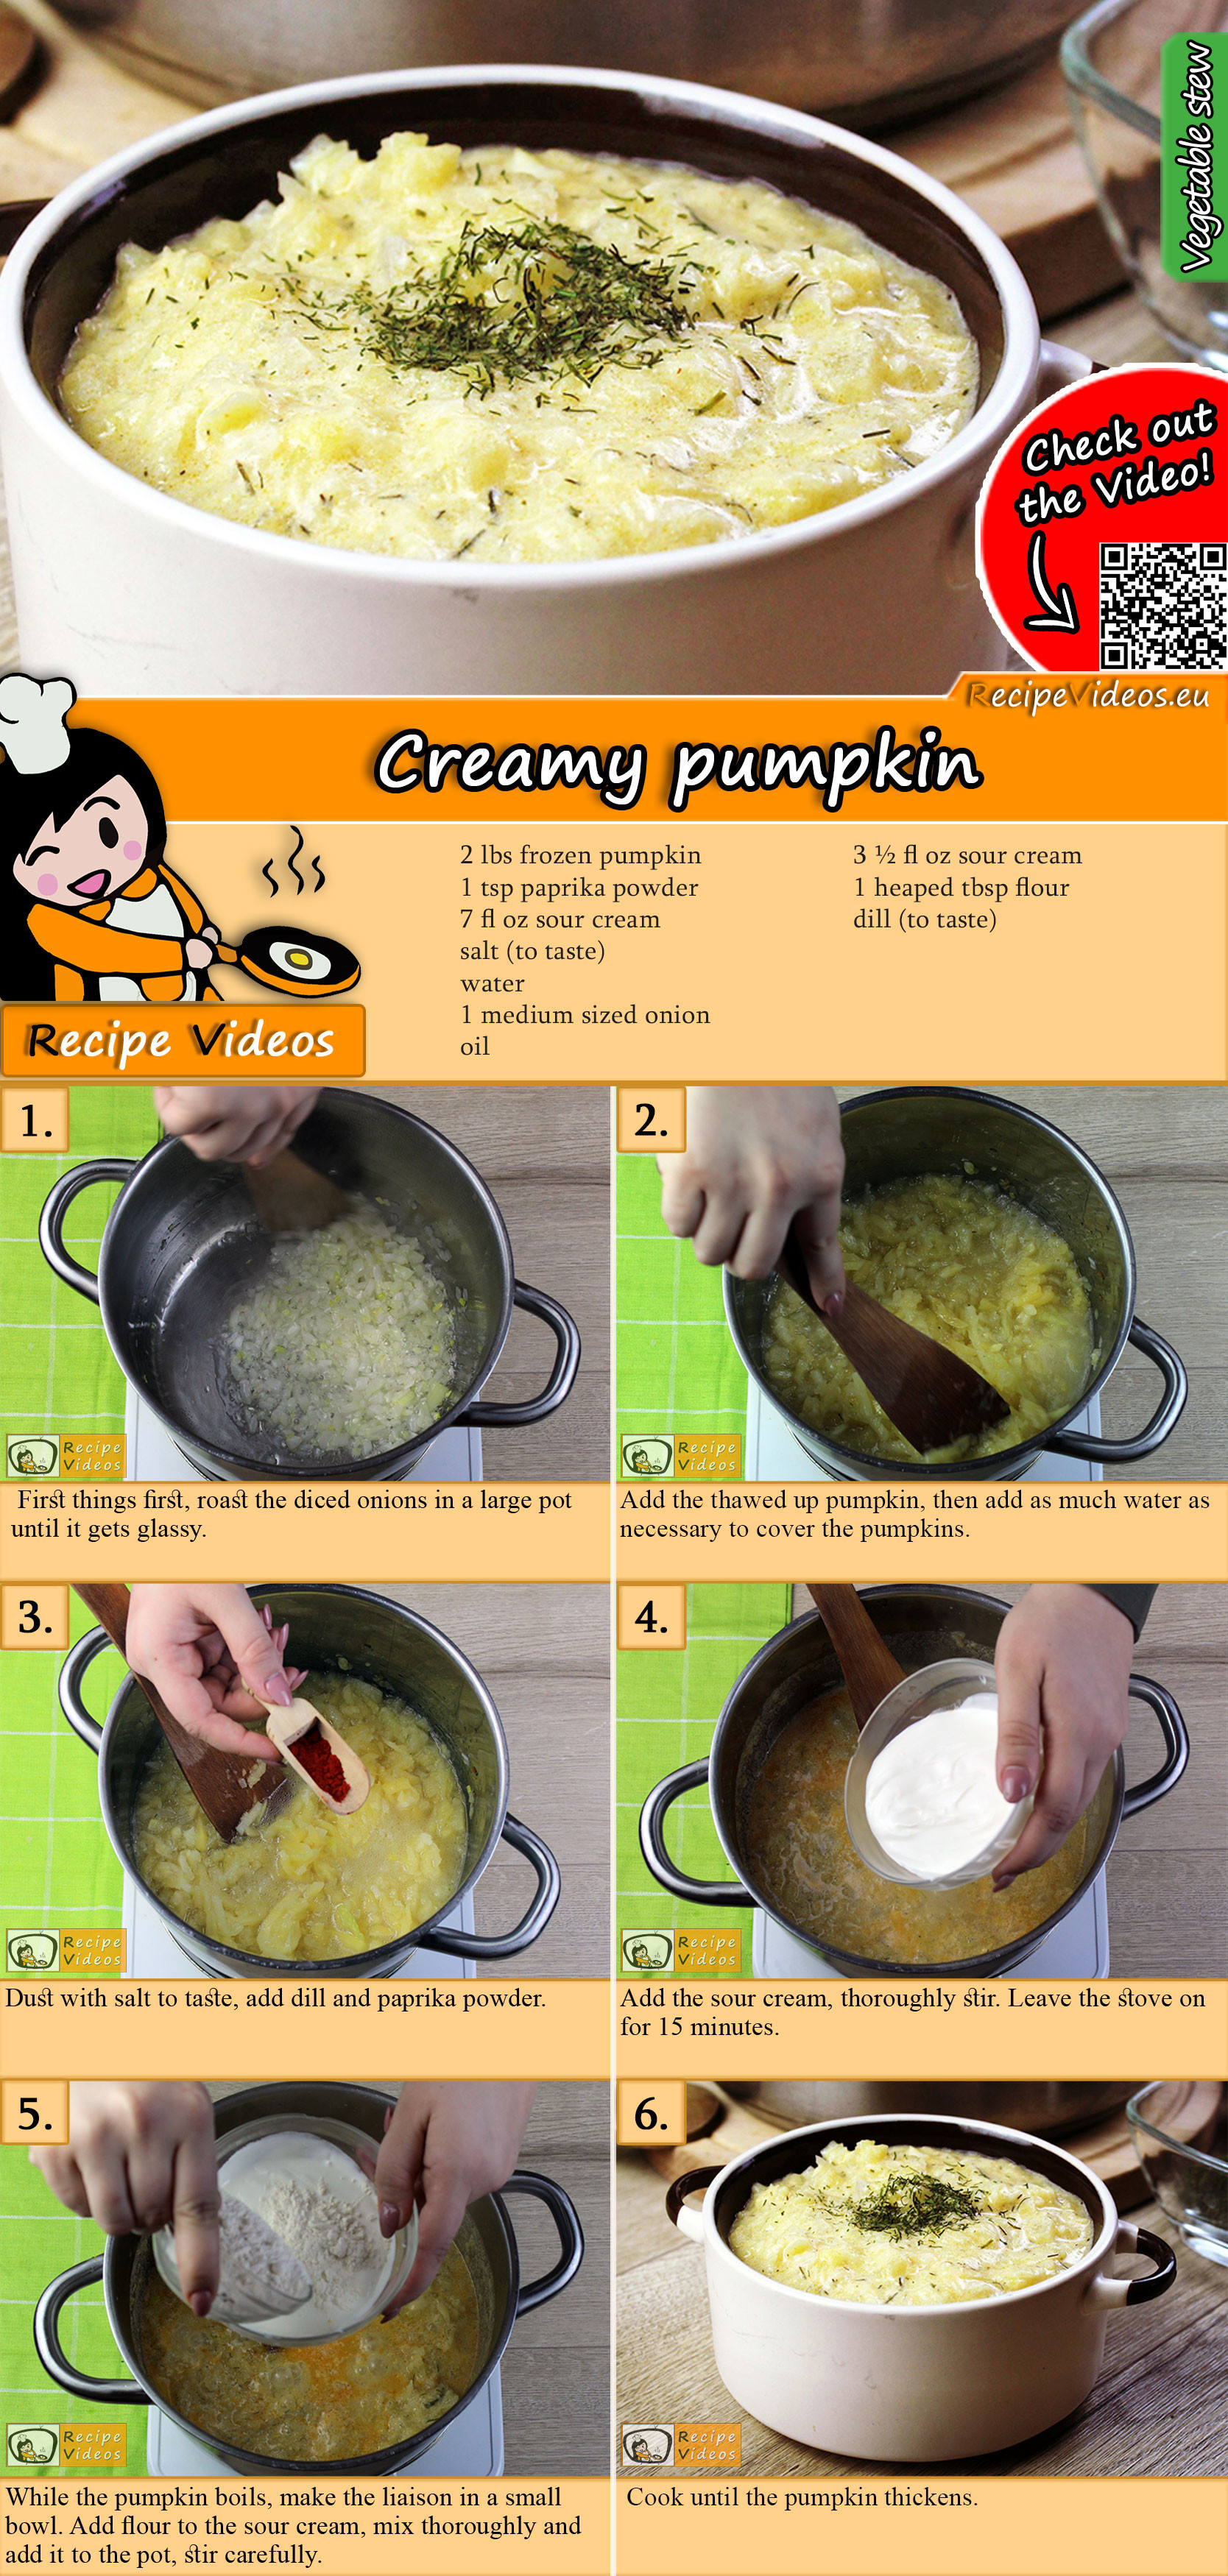 Creamy pumpkin recipe with video